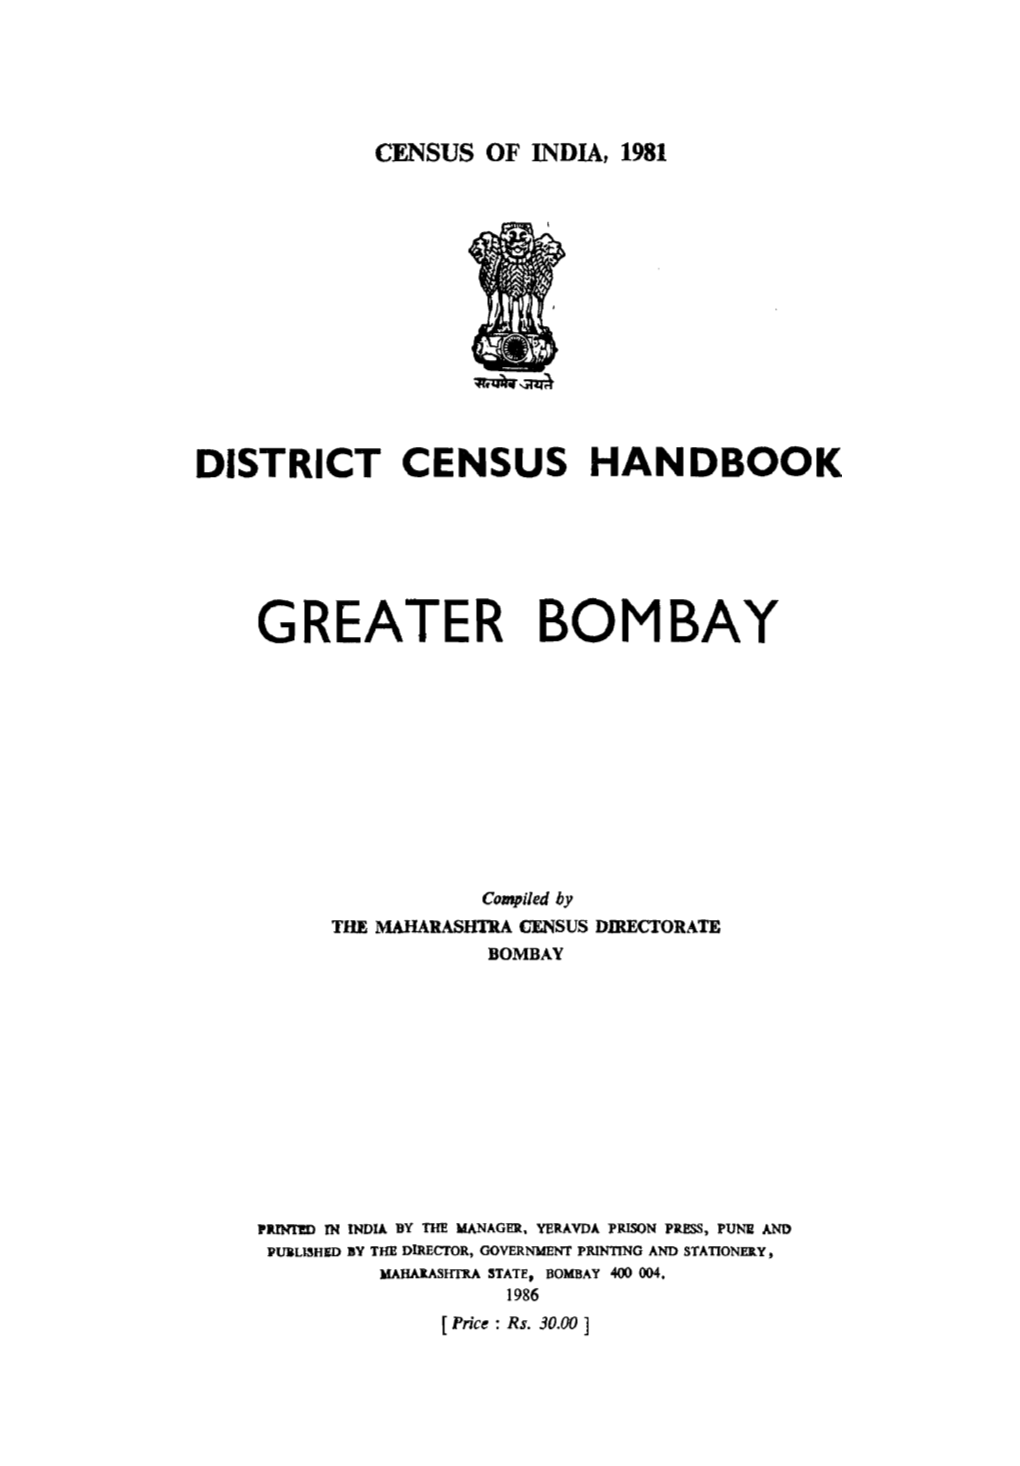 District Census Handbook, Greater Bombay